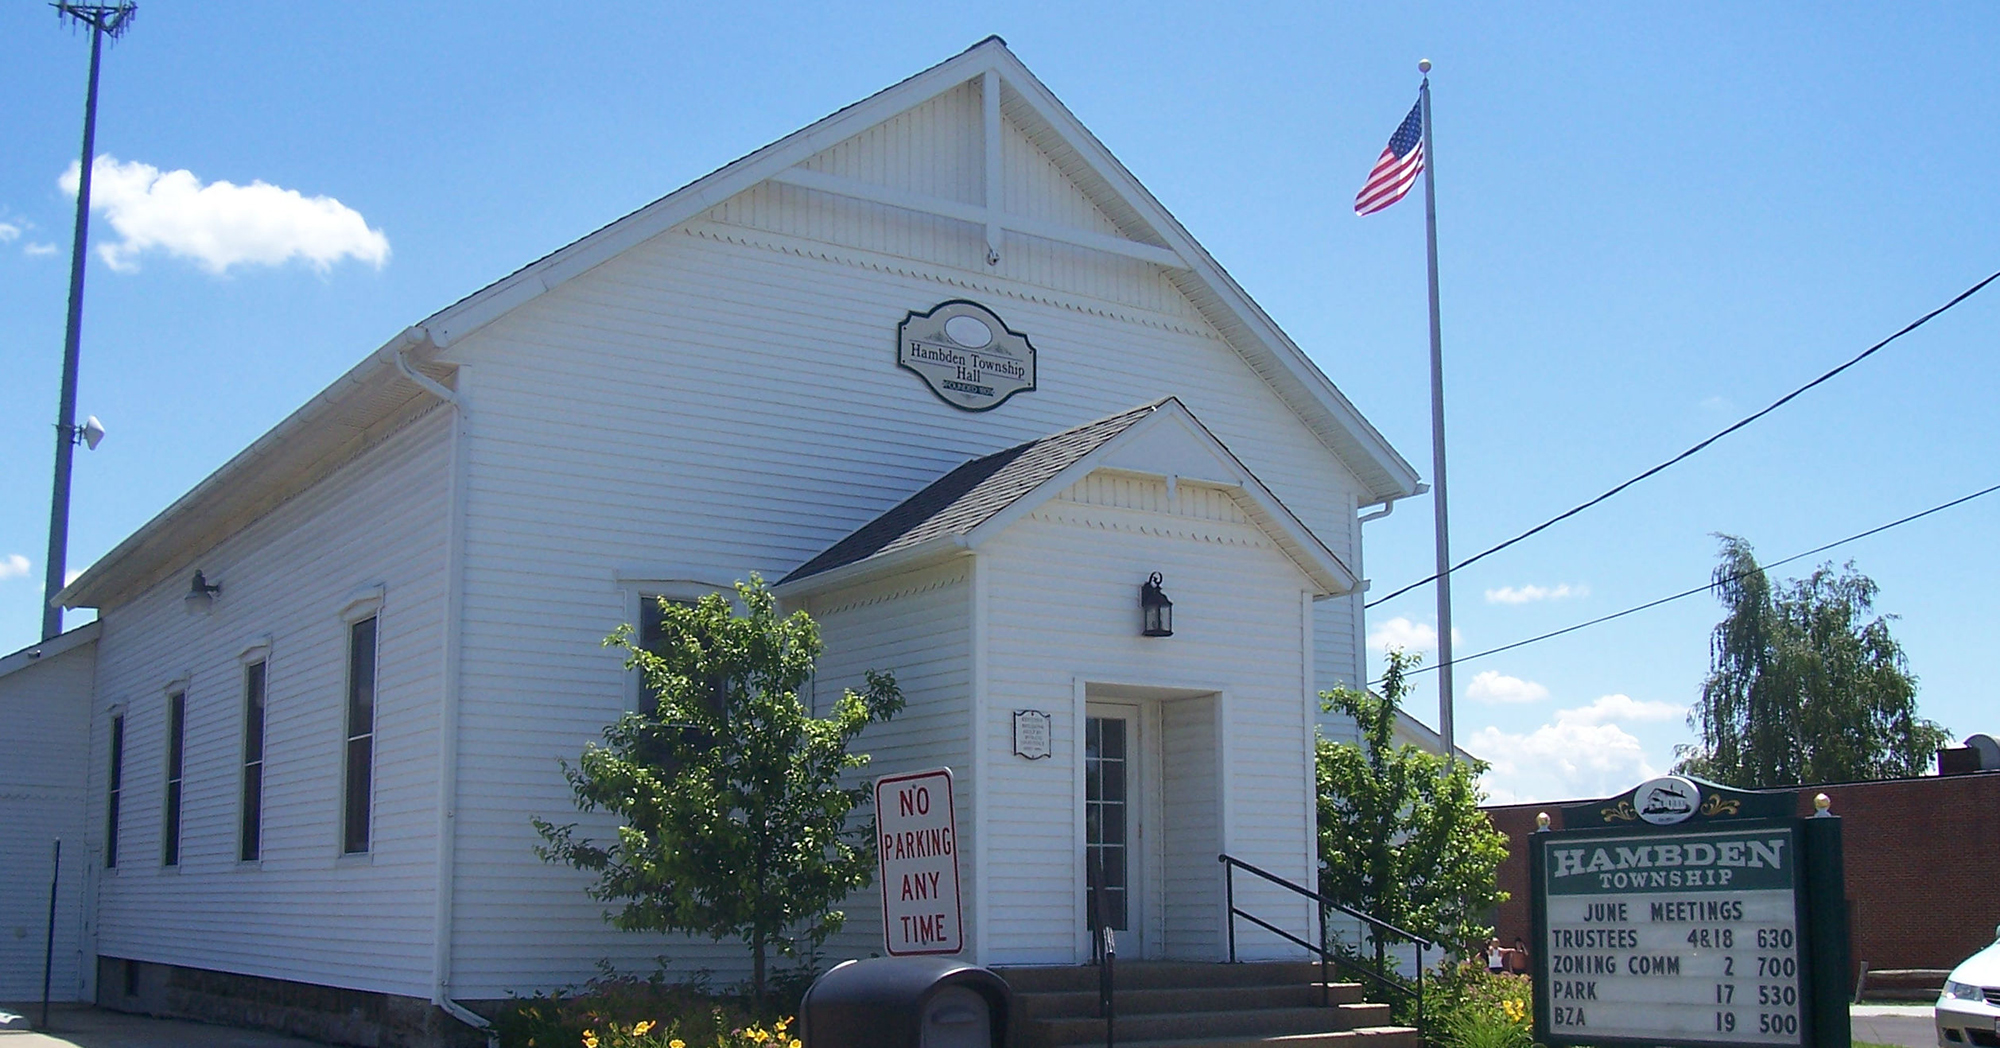 Hambden Township Town Hall